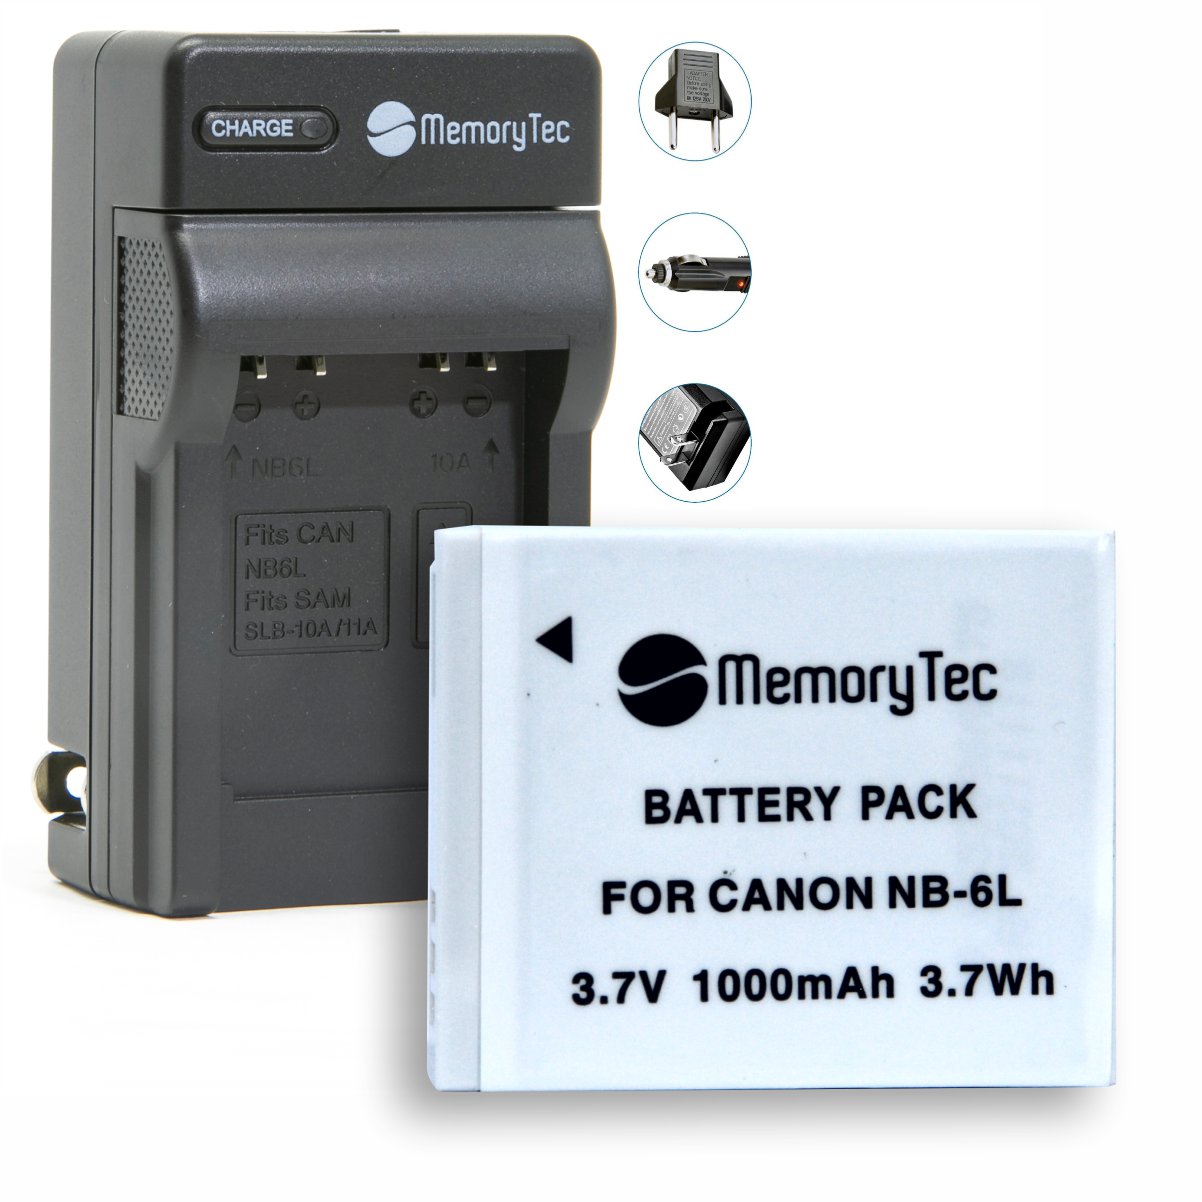 Kit Bateria NB-6L + carregador para câmera digital e filmadora Canon Digital Ixus 85 IS, IXY Digital 25IS, PowerShort SX500